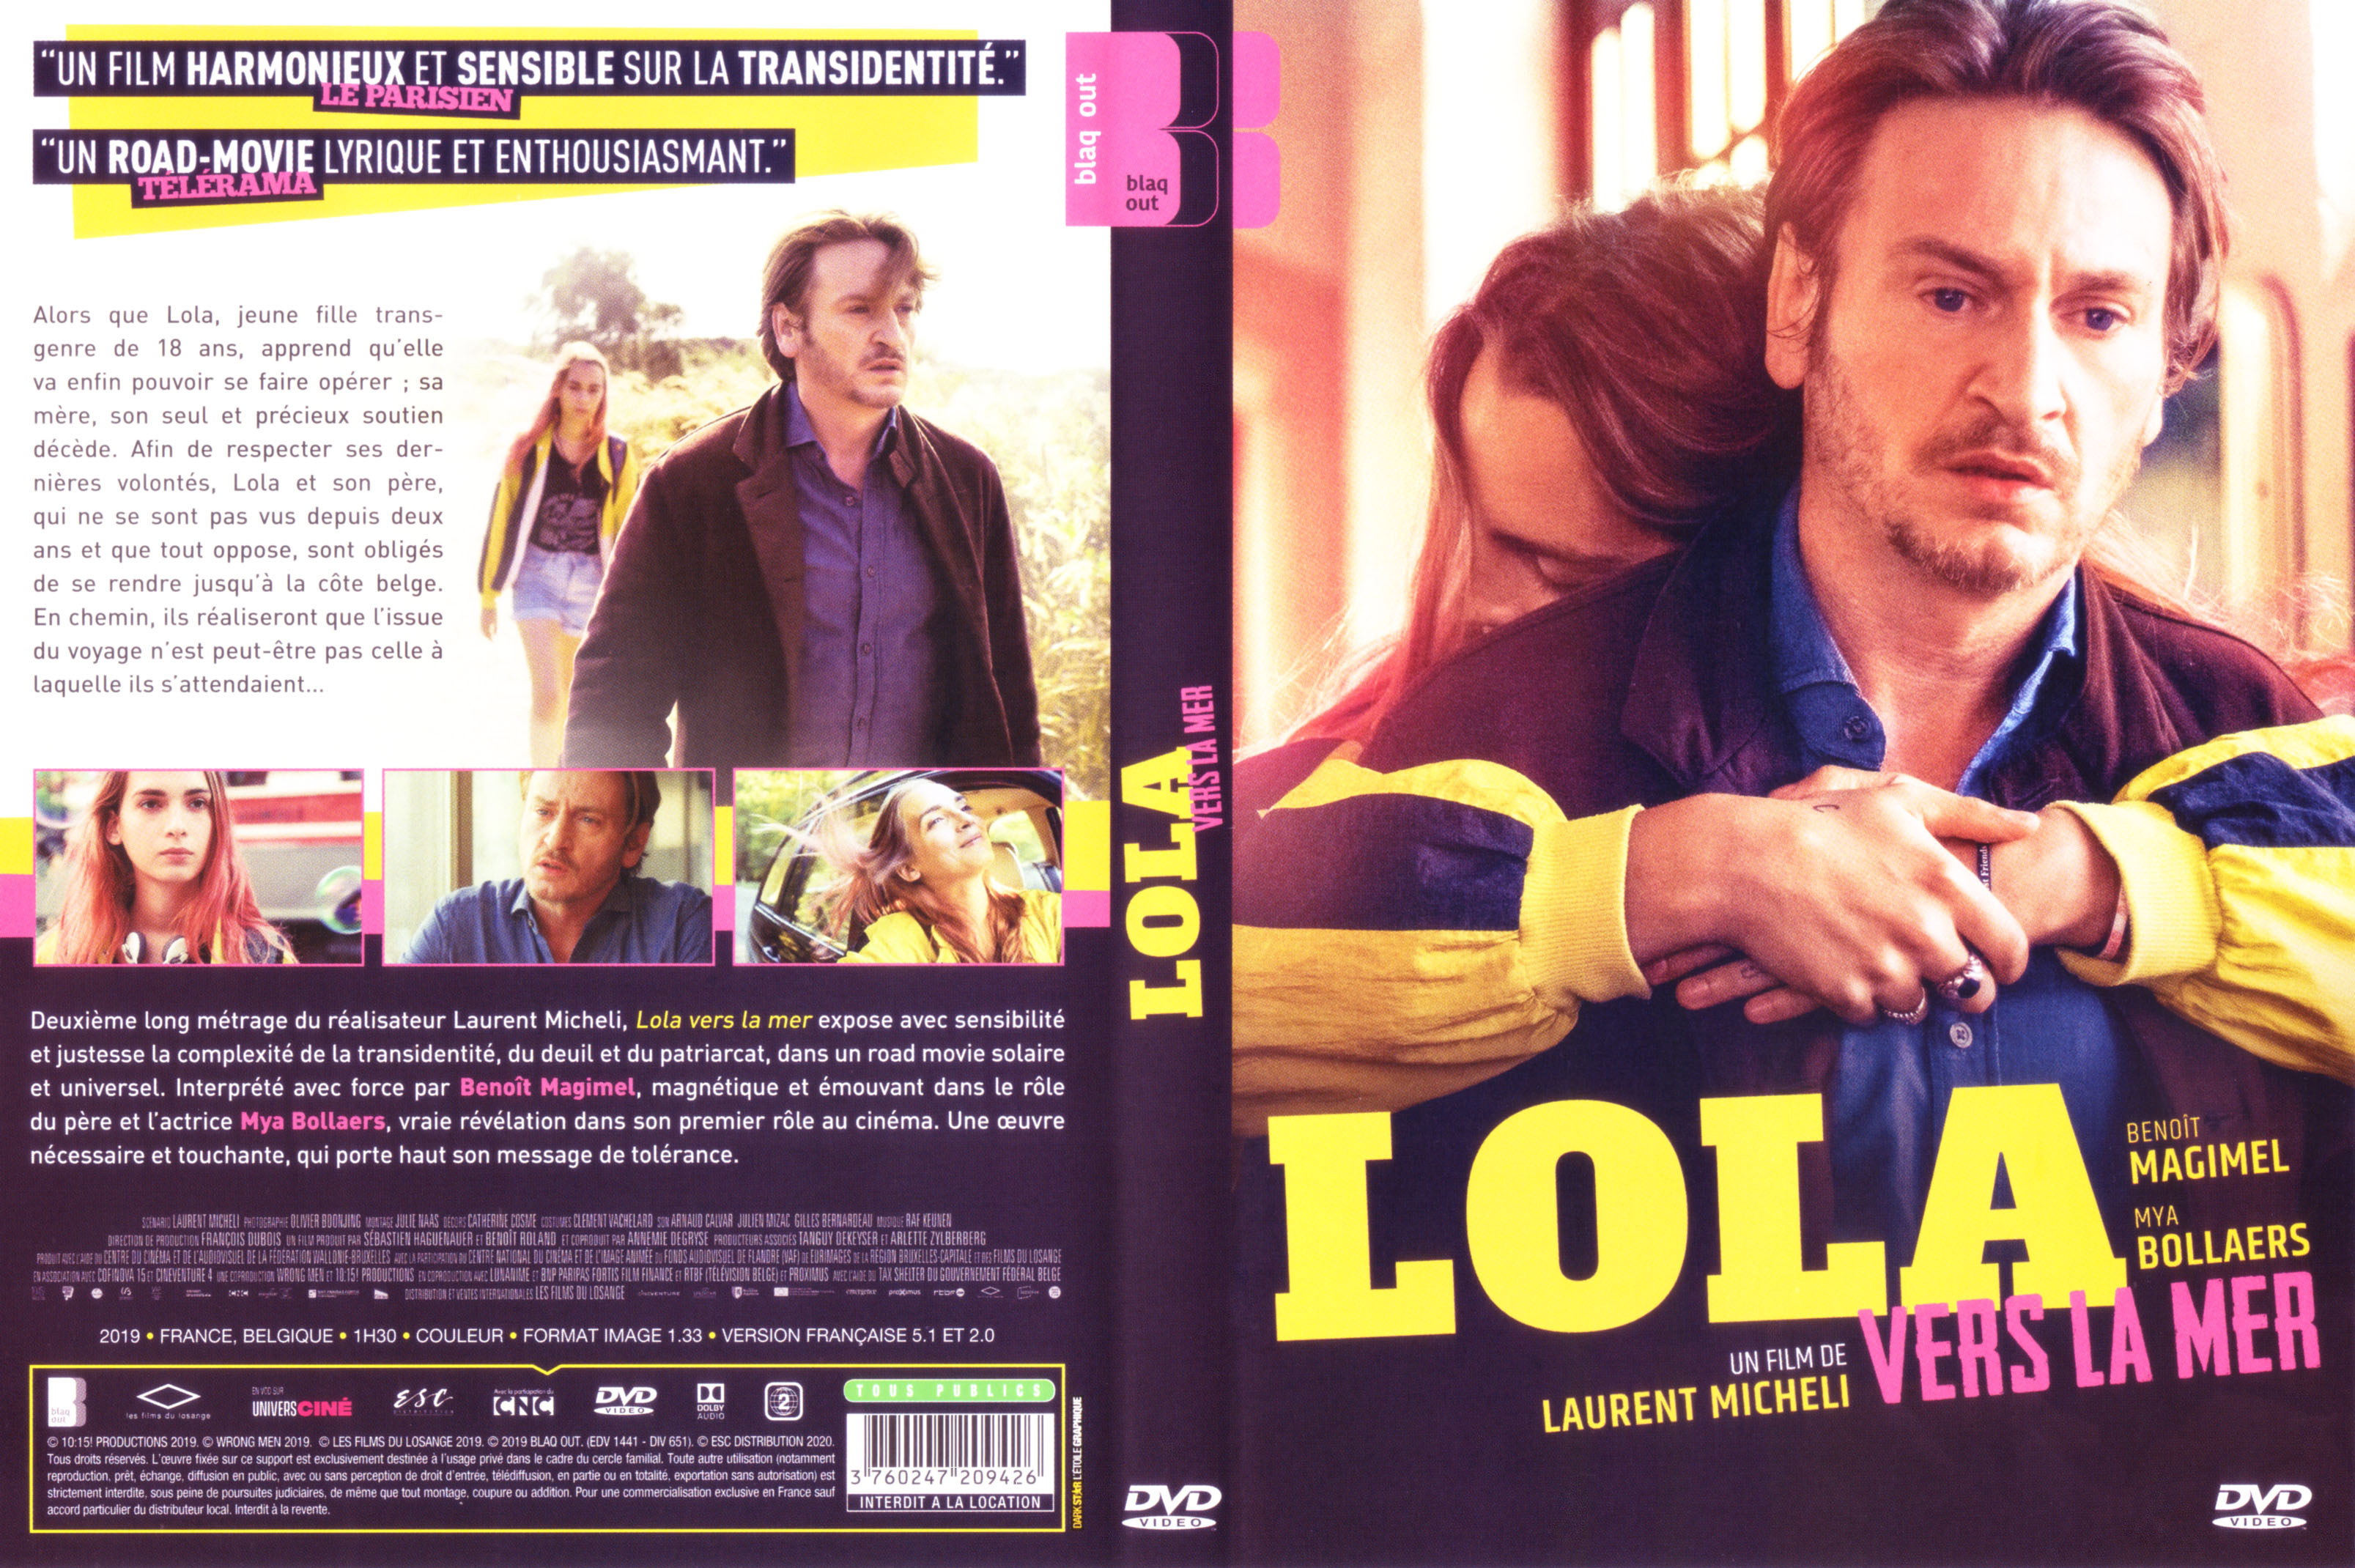 Jaquette DVD Lola vers la mer